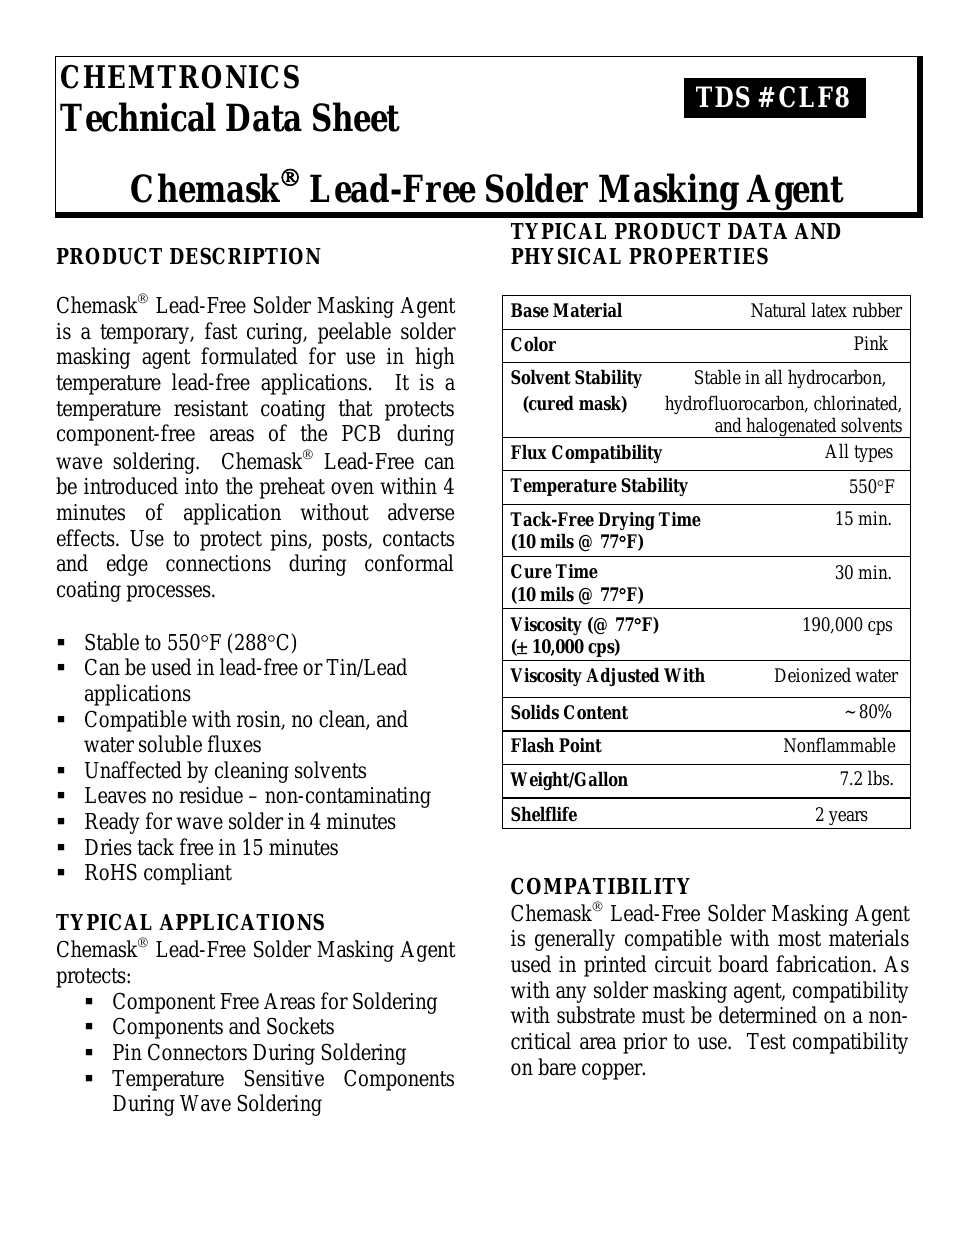 Chemask® LF - Lead-Free CLF8